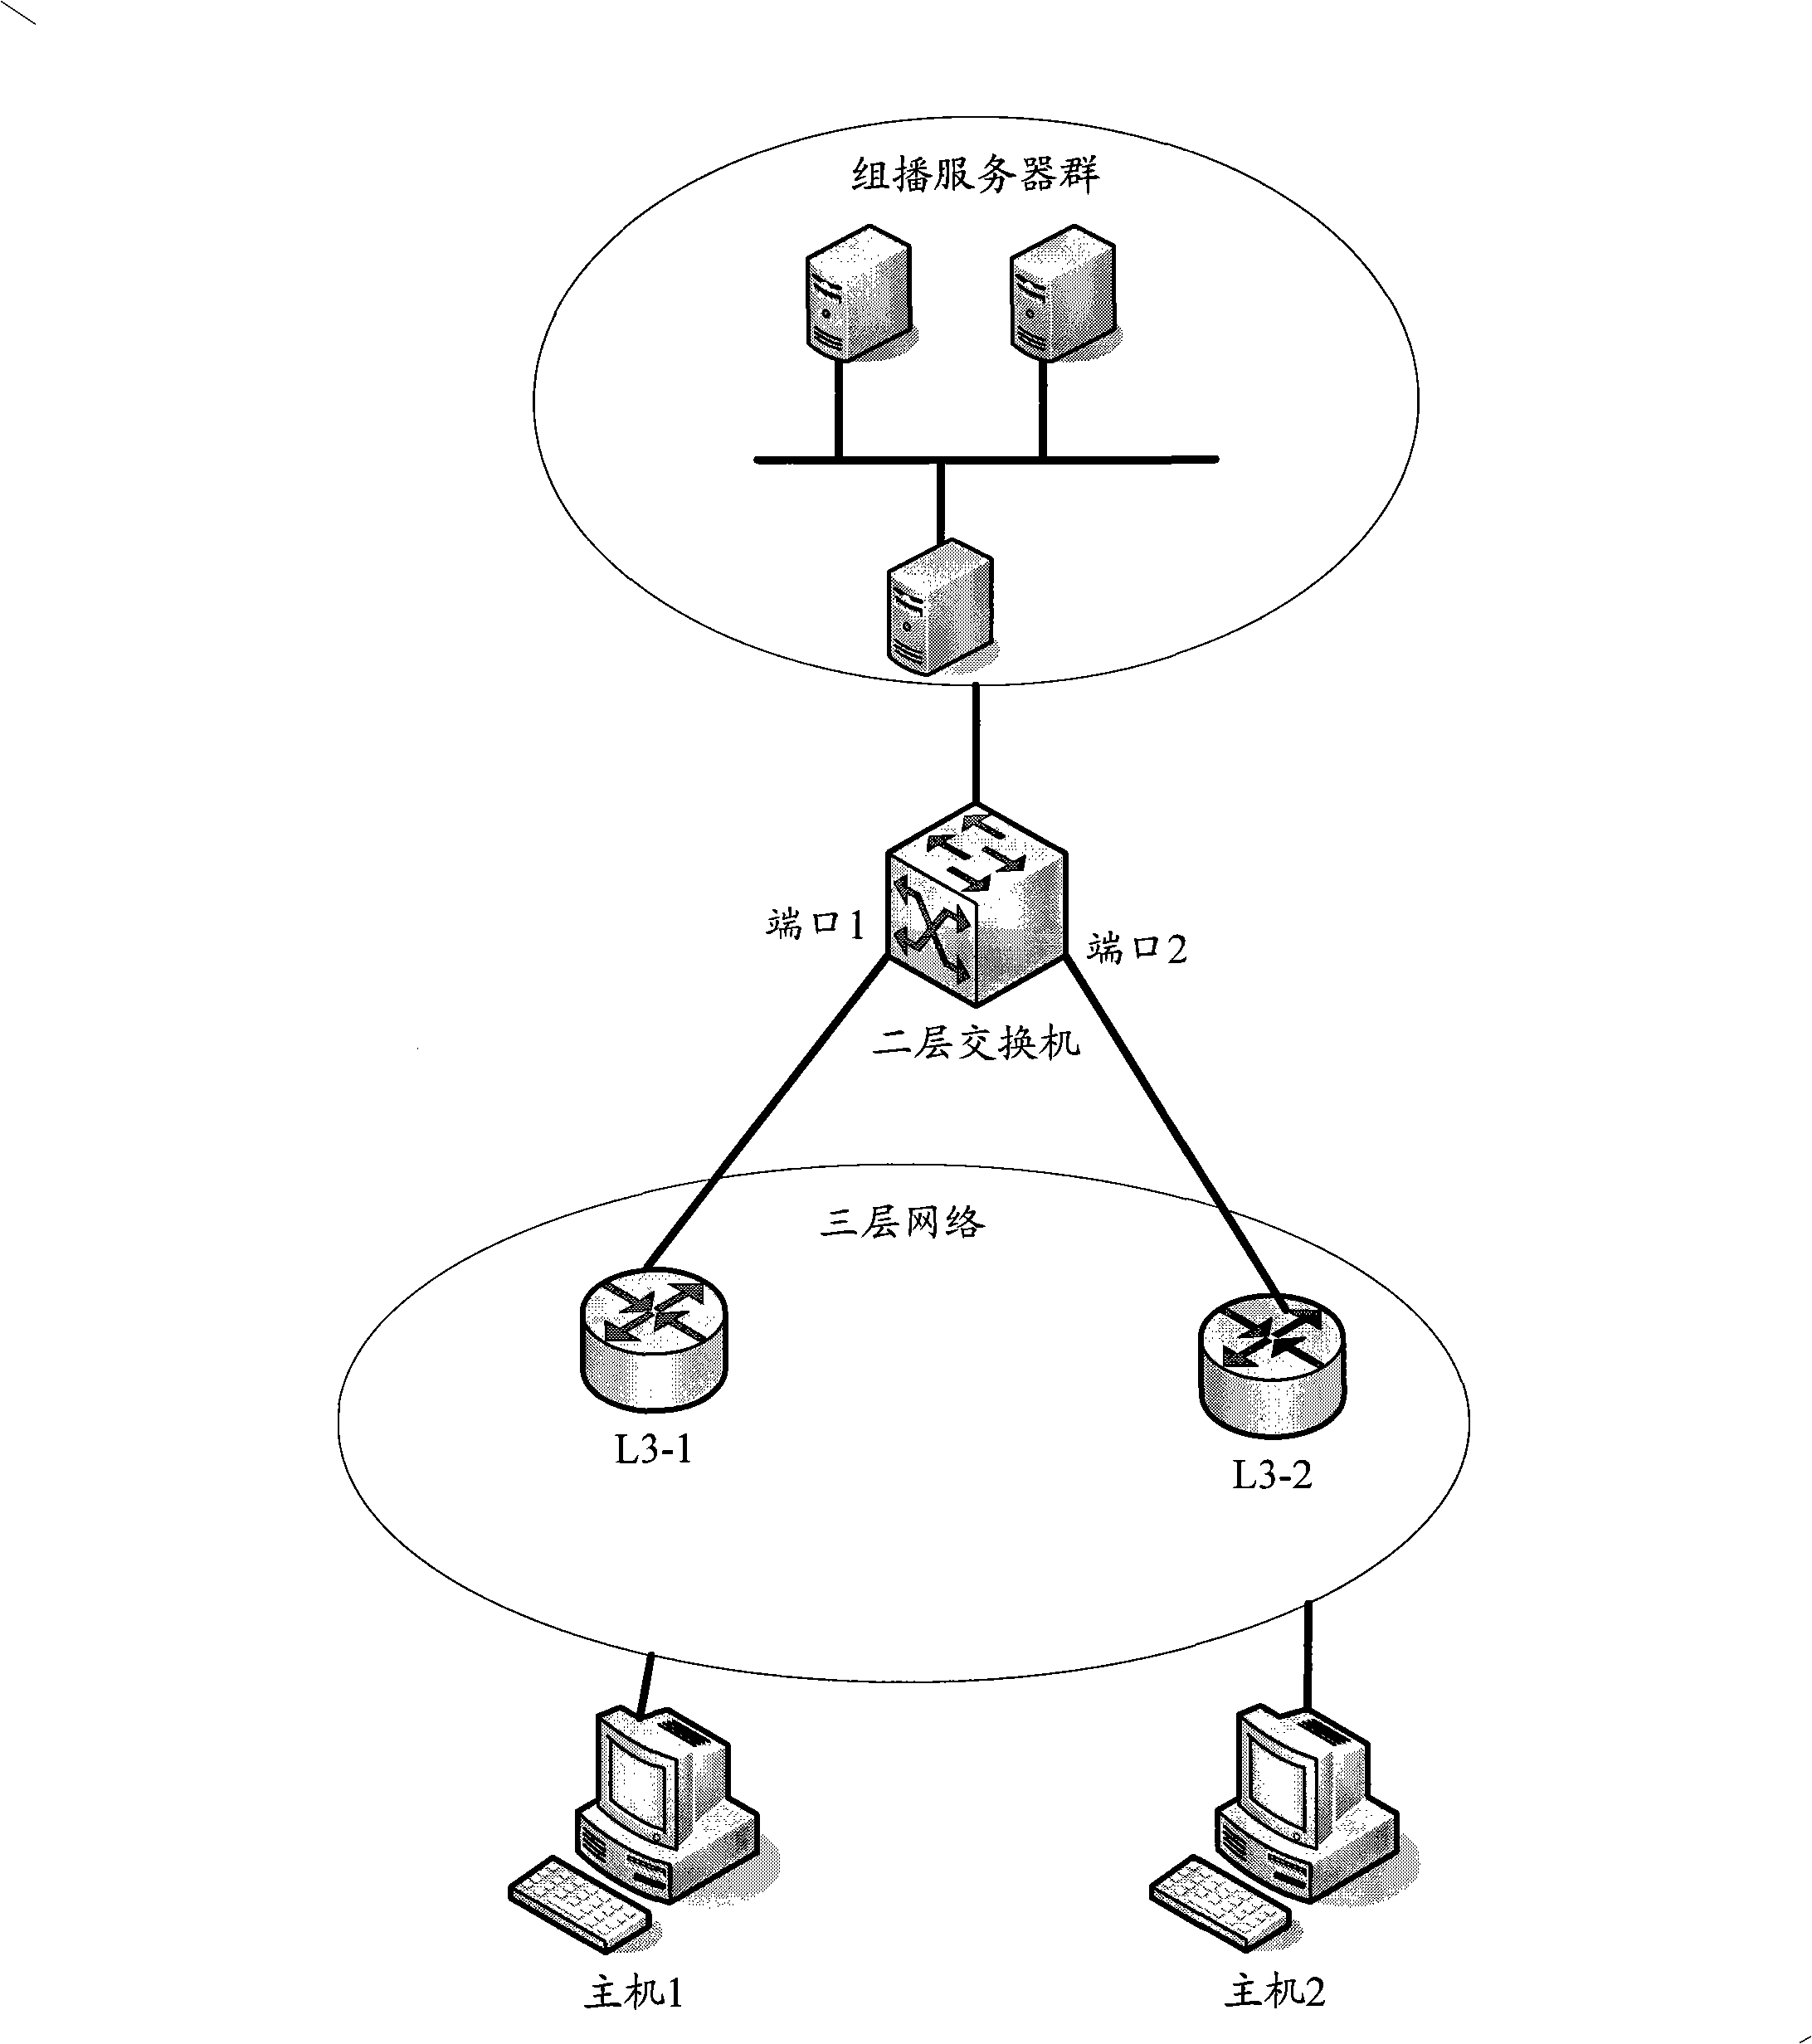 Multicast flow transmission method and system